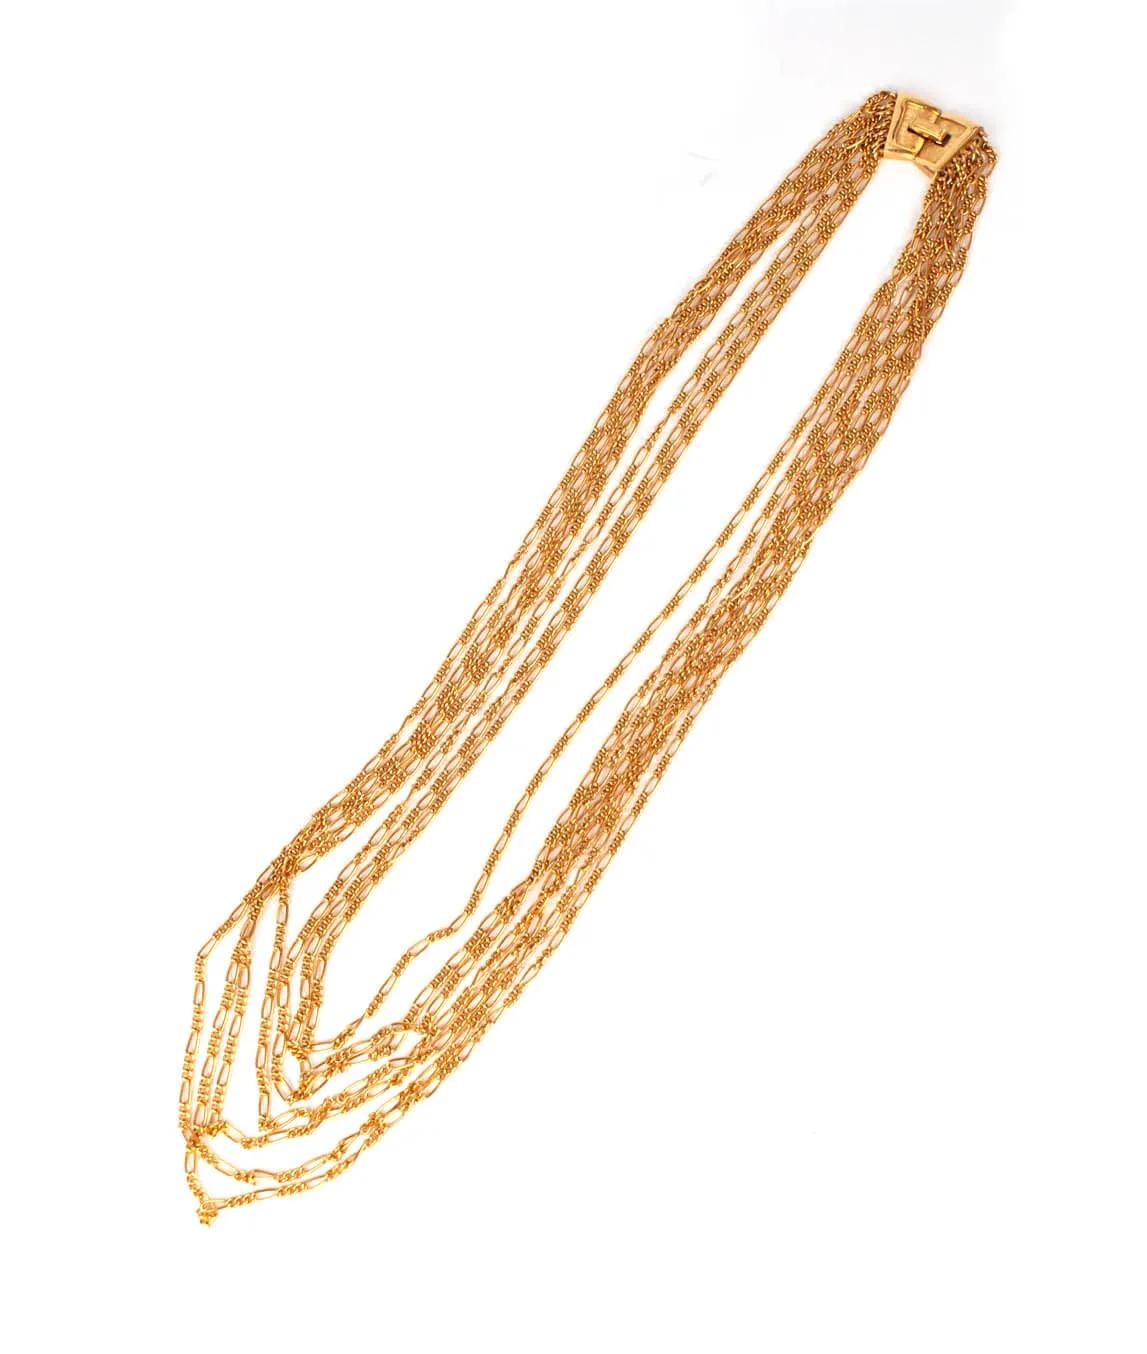 Crown Trifari chain necklace